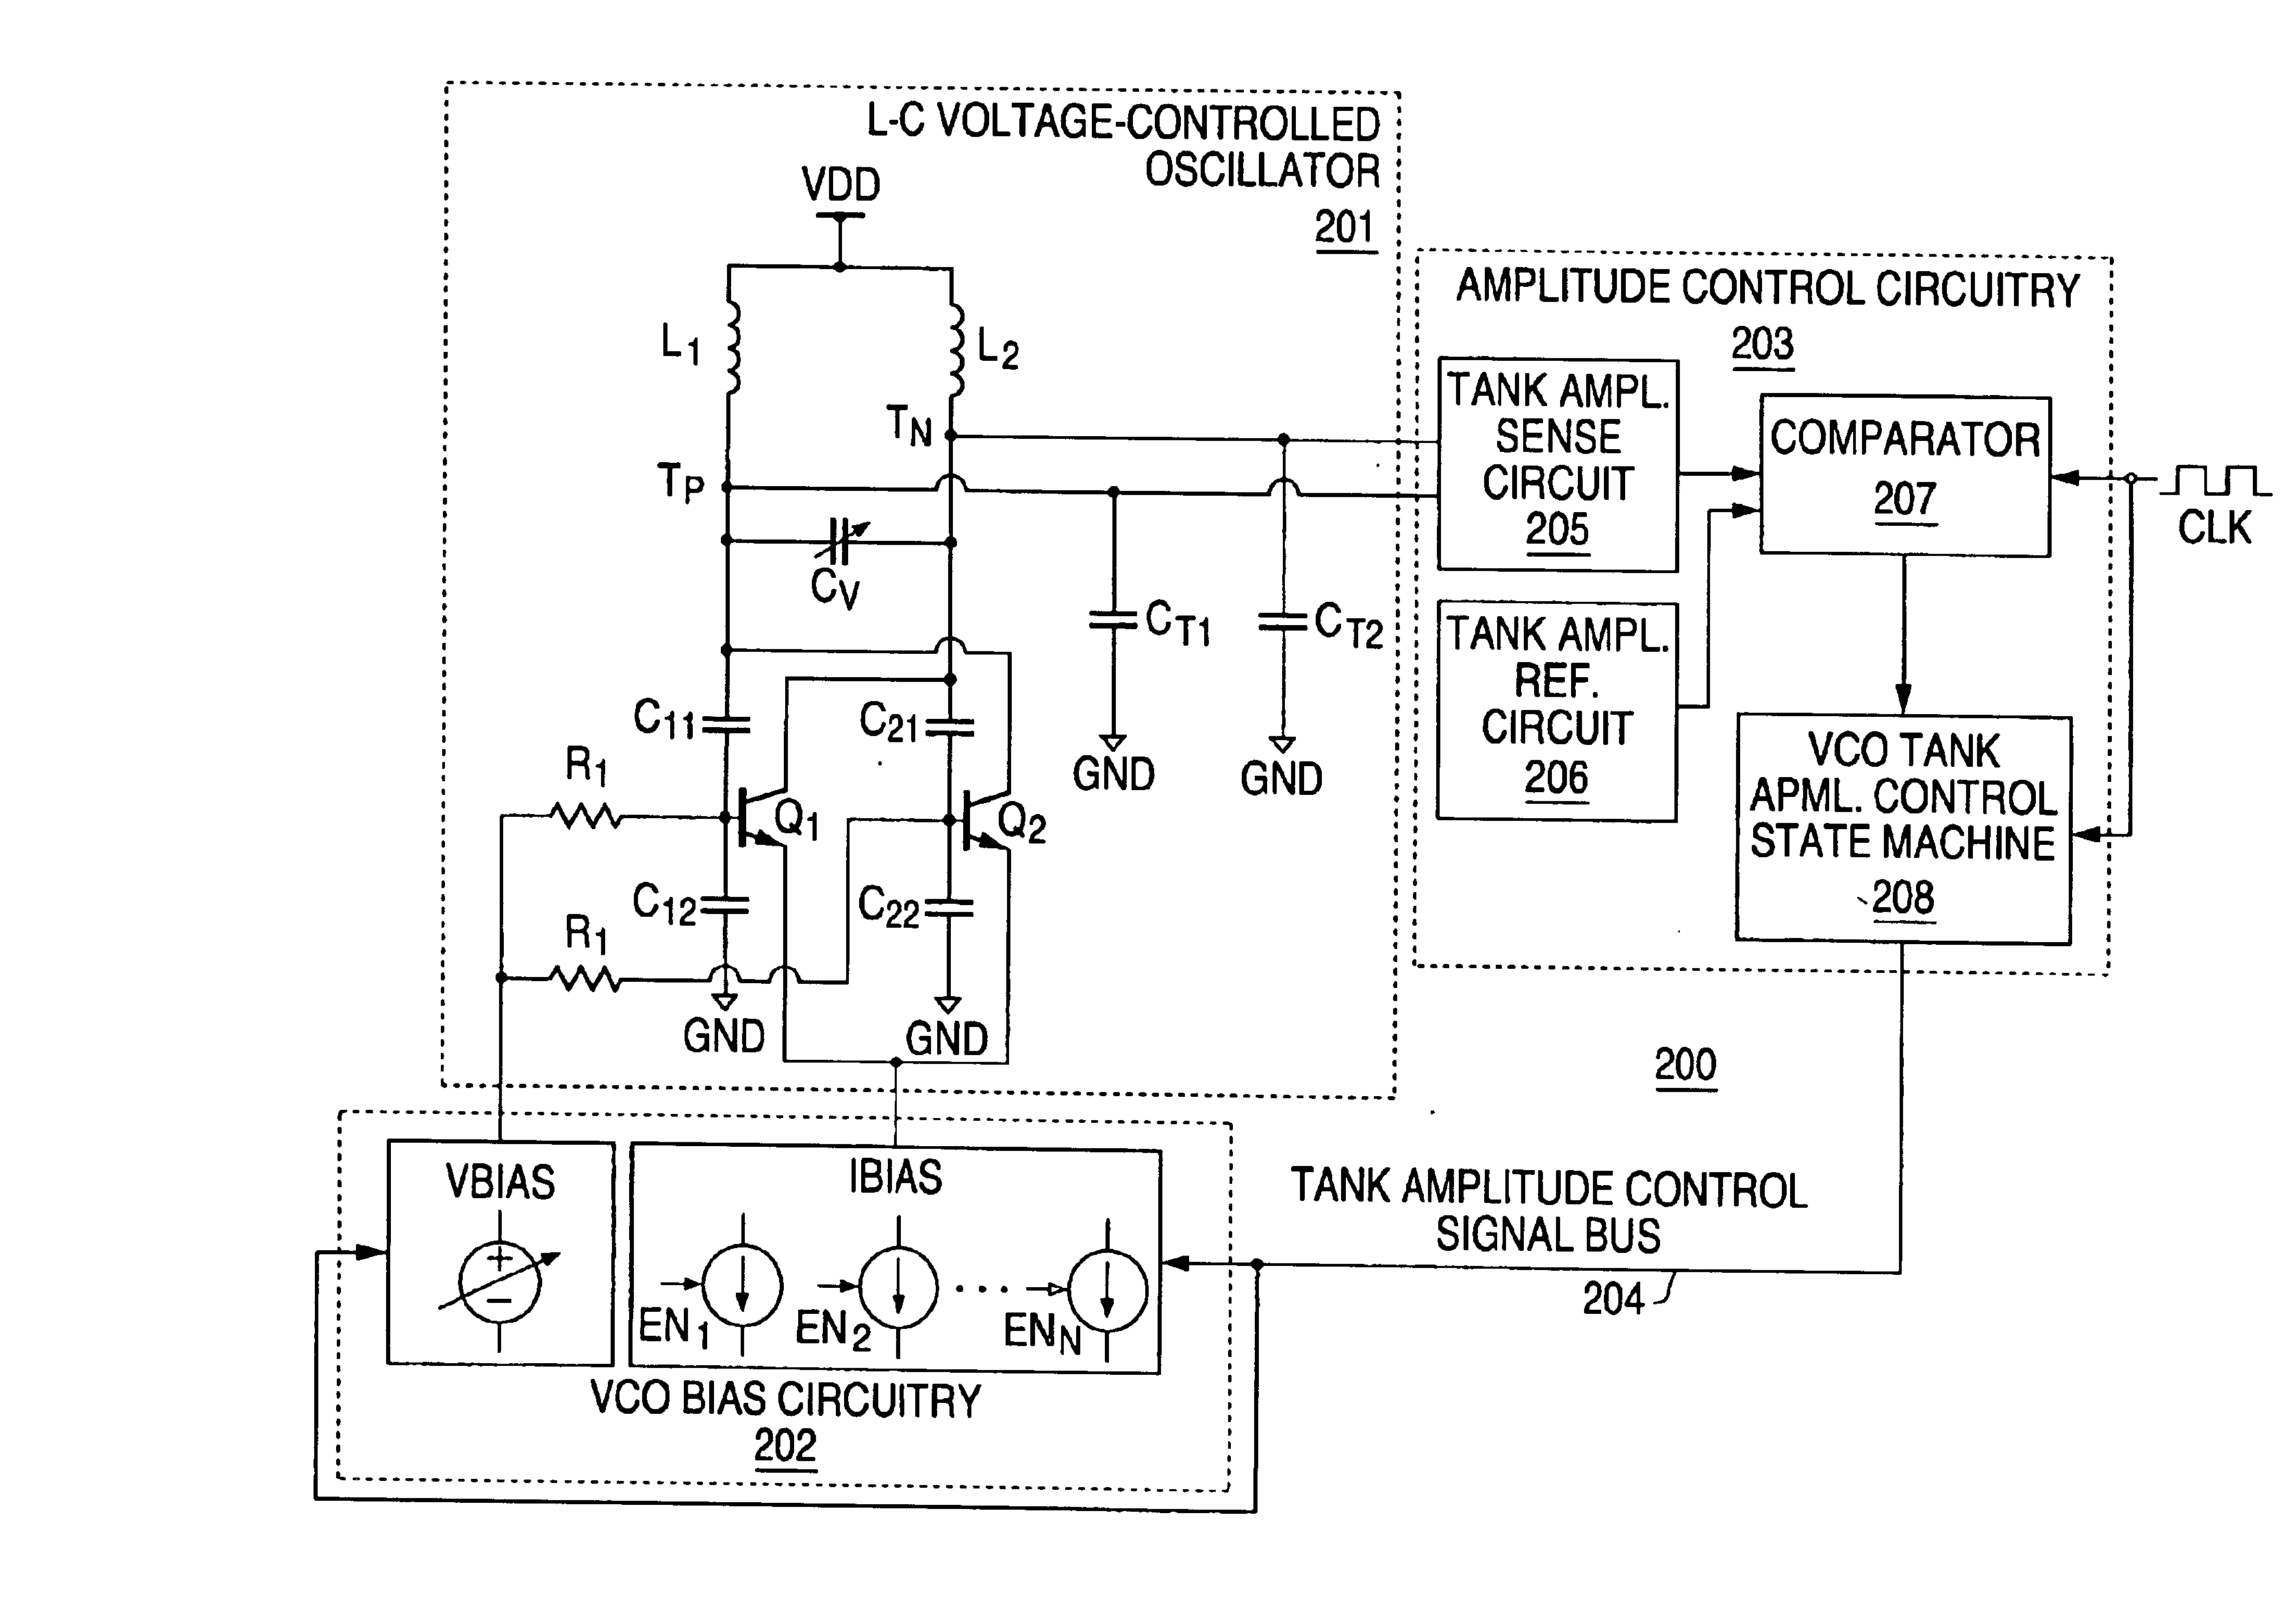 Discrete-time amplitude control of voltage-controlled oscillator